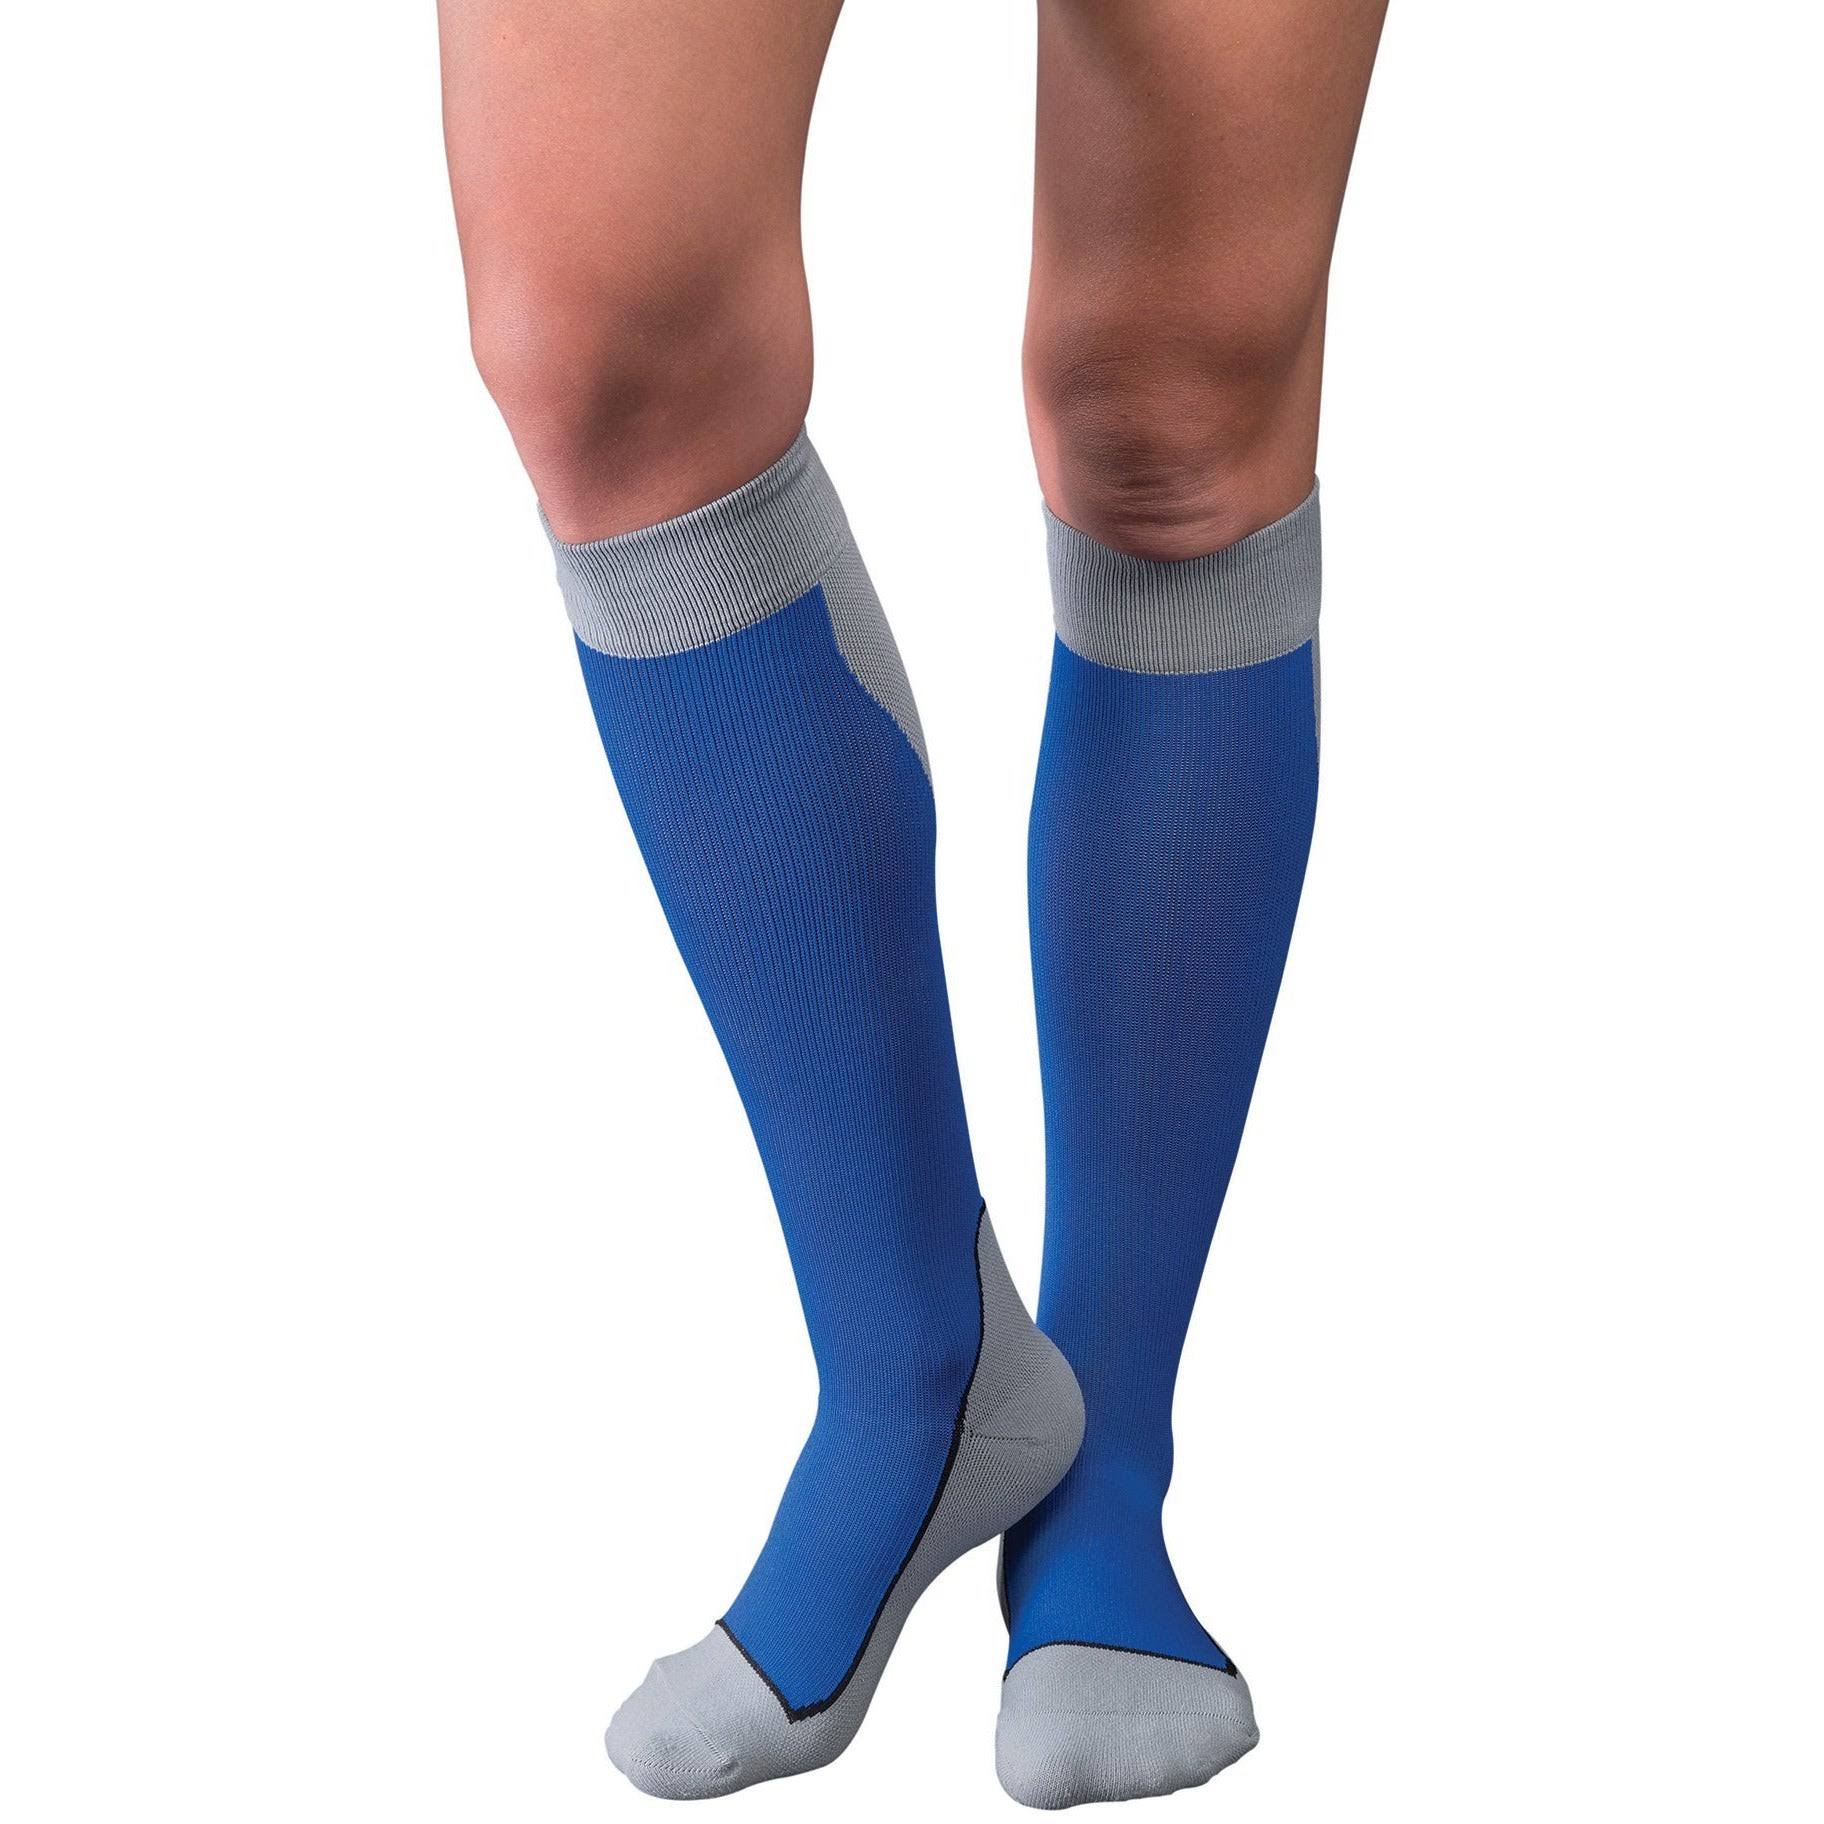 JOBST Sport Knee High 15-20 mmHg Compression Socks, Royal Blue/Grey, M